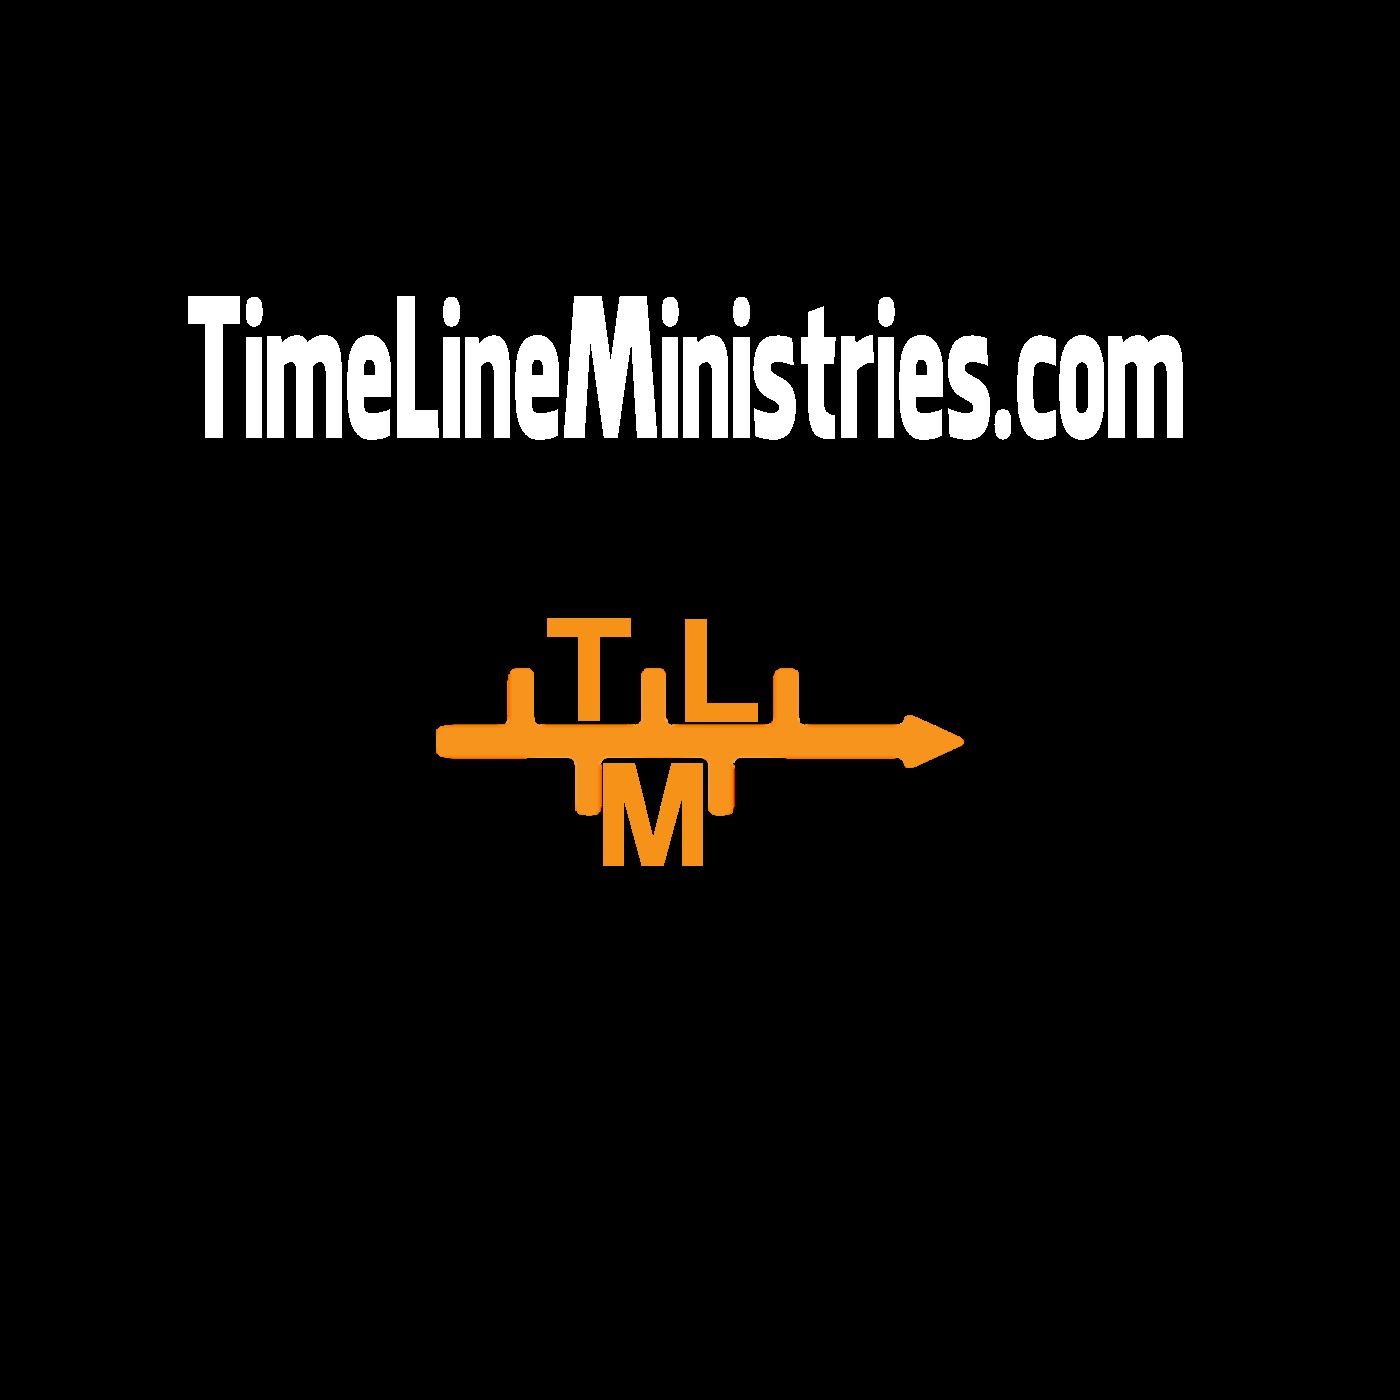 Timeline Ministries